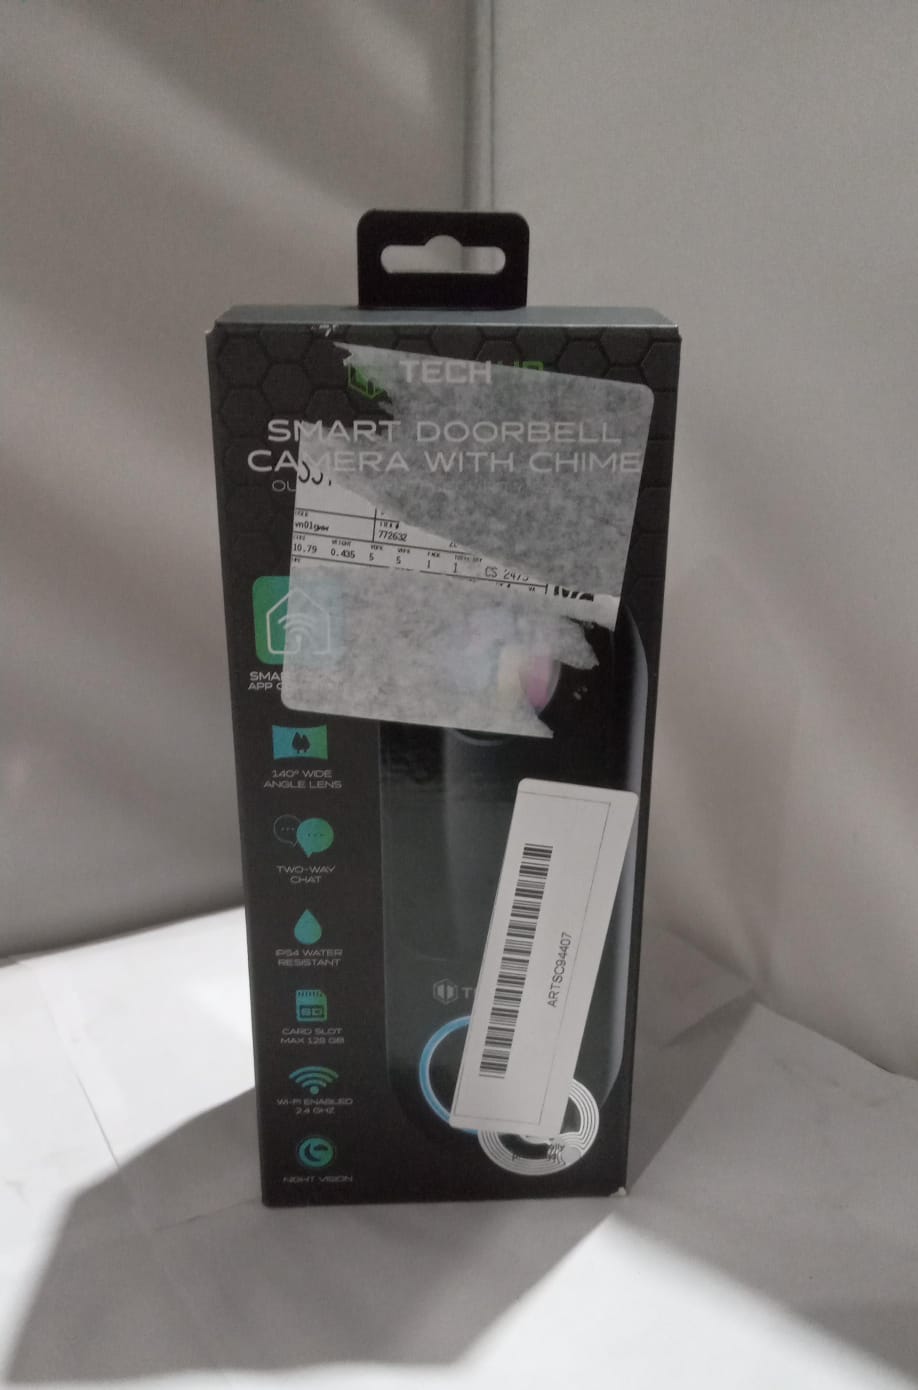 Camara De Seguridad Tech Up Smart Doorbell Camera With Chime [Openbox] [new]